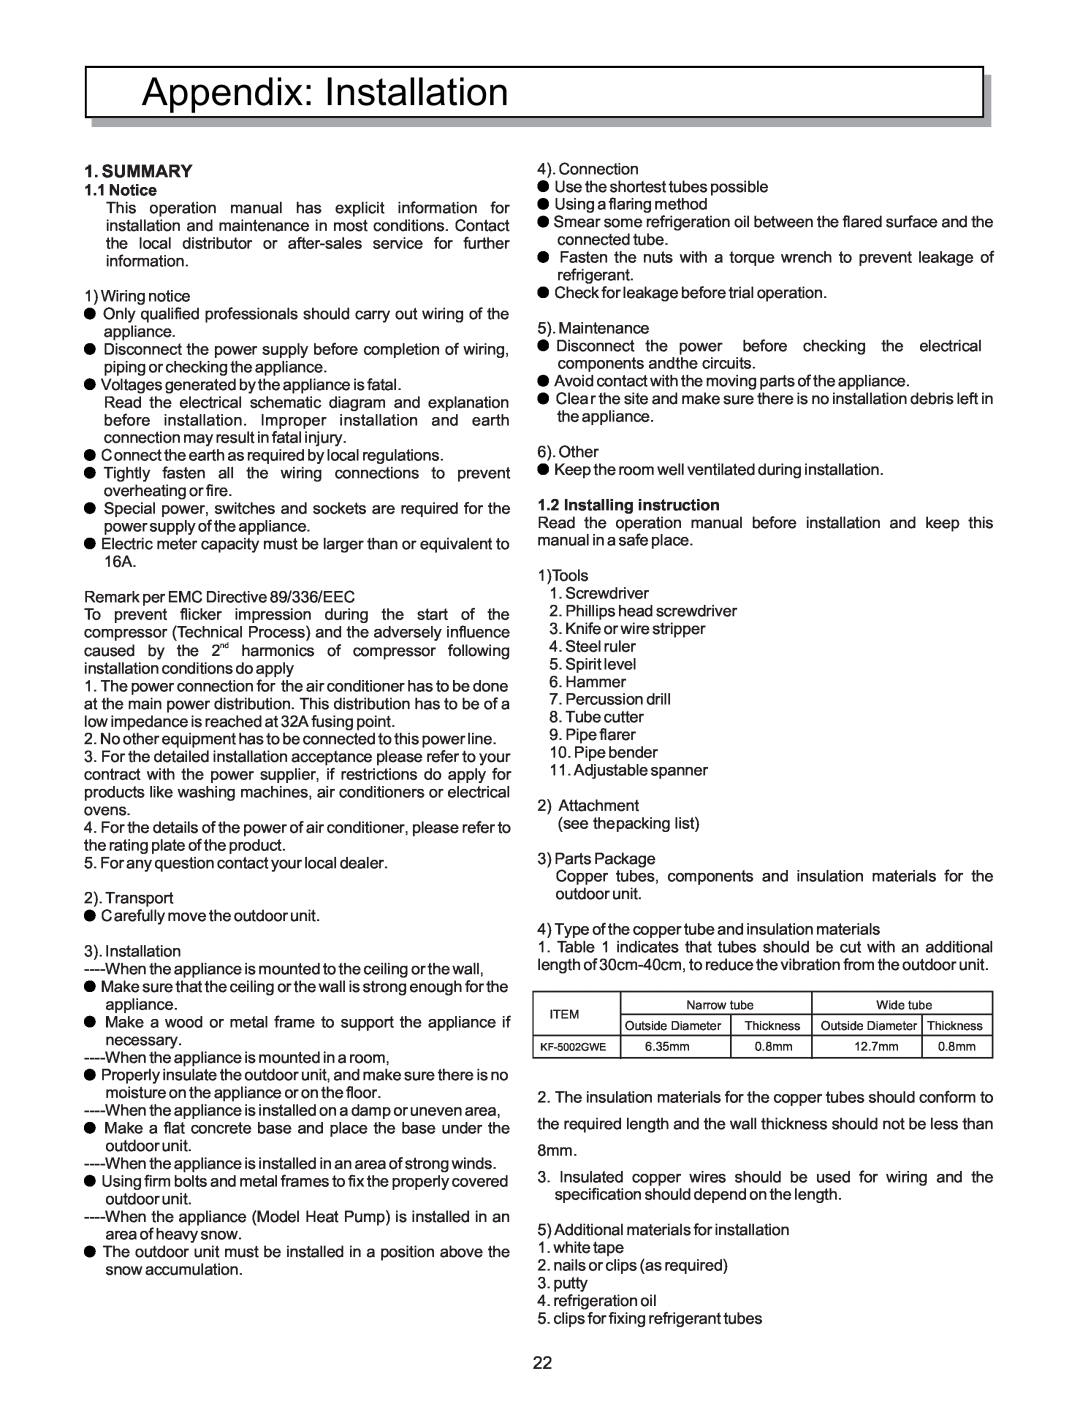 Hisense Group KF-5002GWE manual Appendix Installation, Summary, Installing instruction 